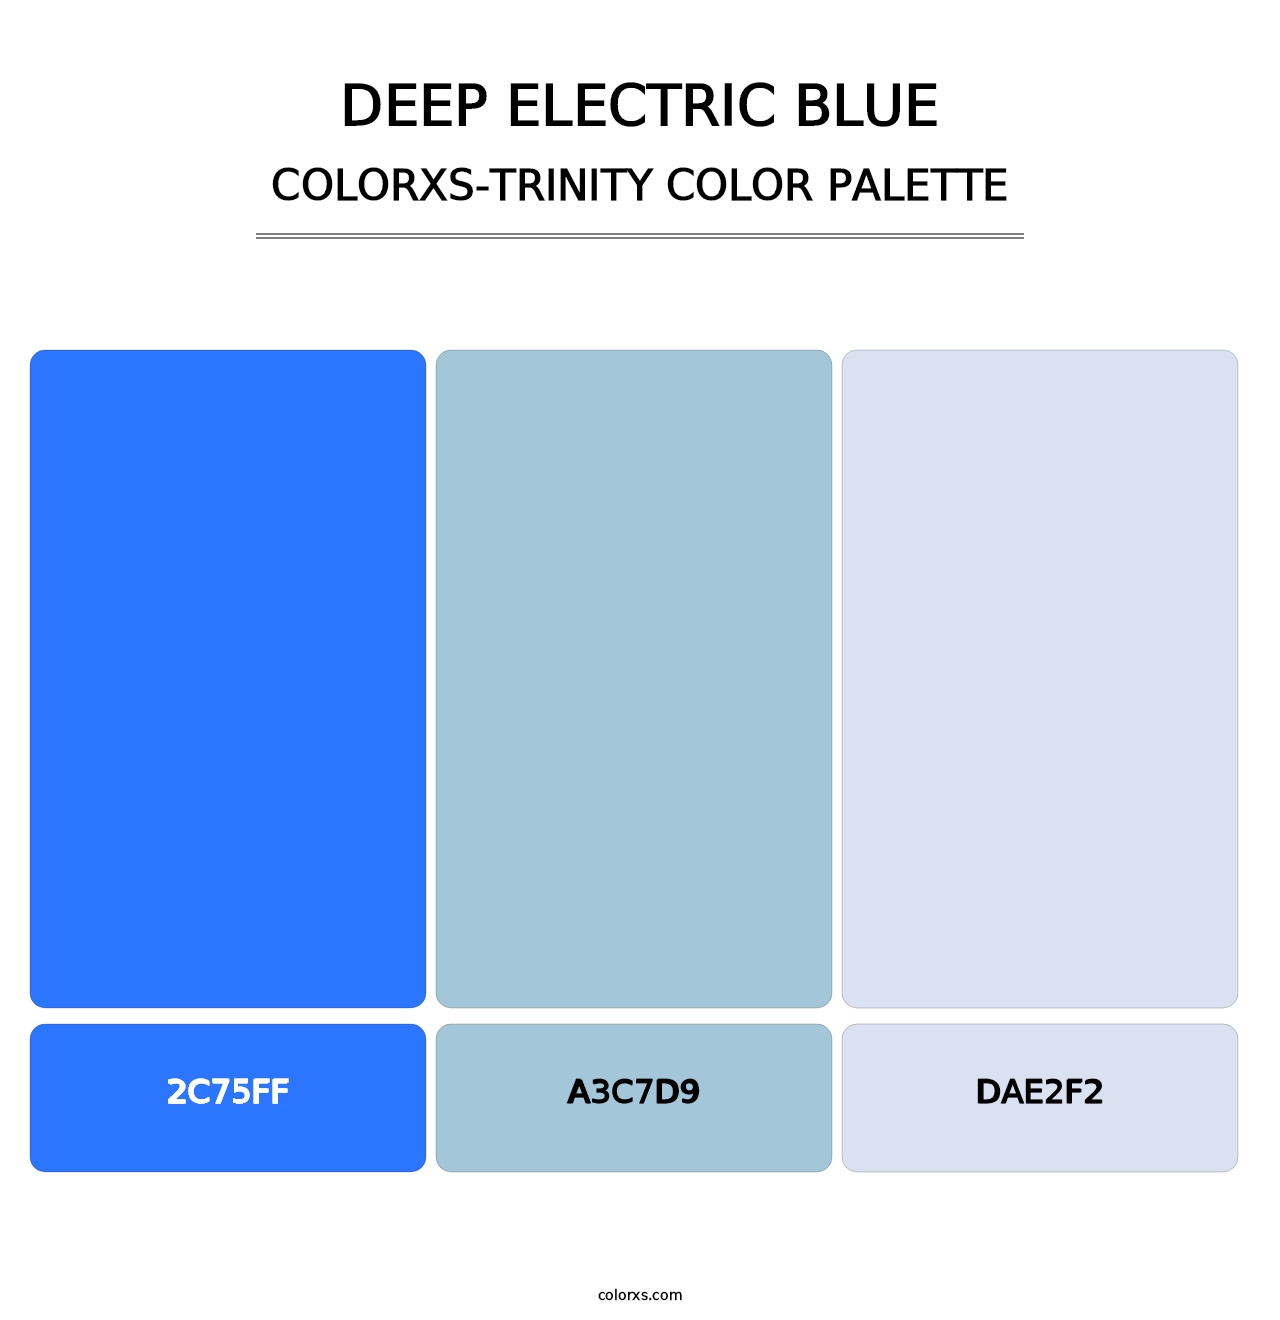 Deep Electric Blue - Colorxs Trinity Palette